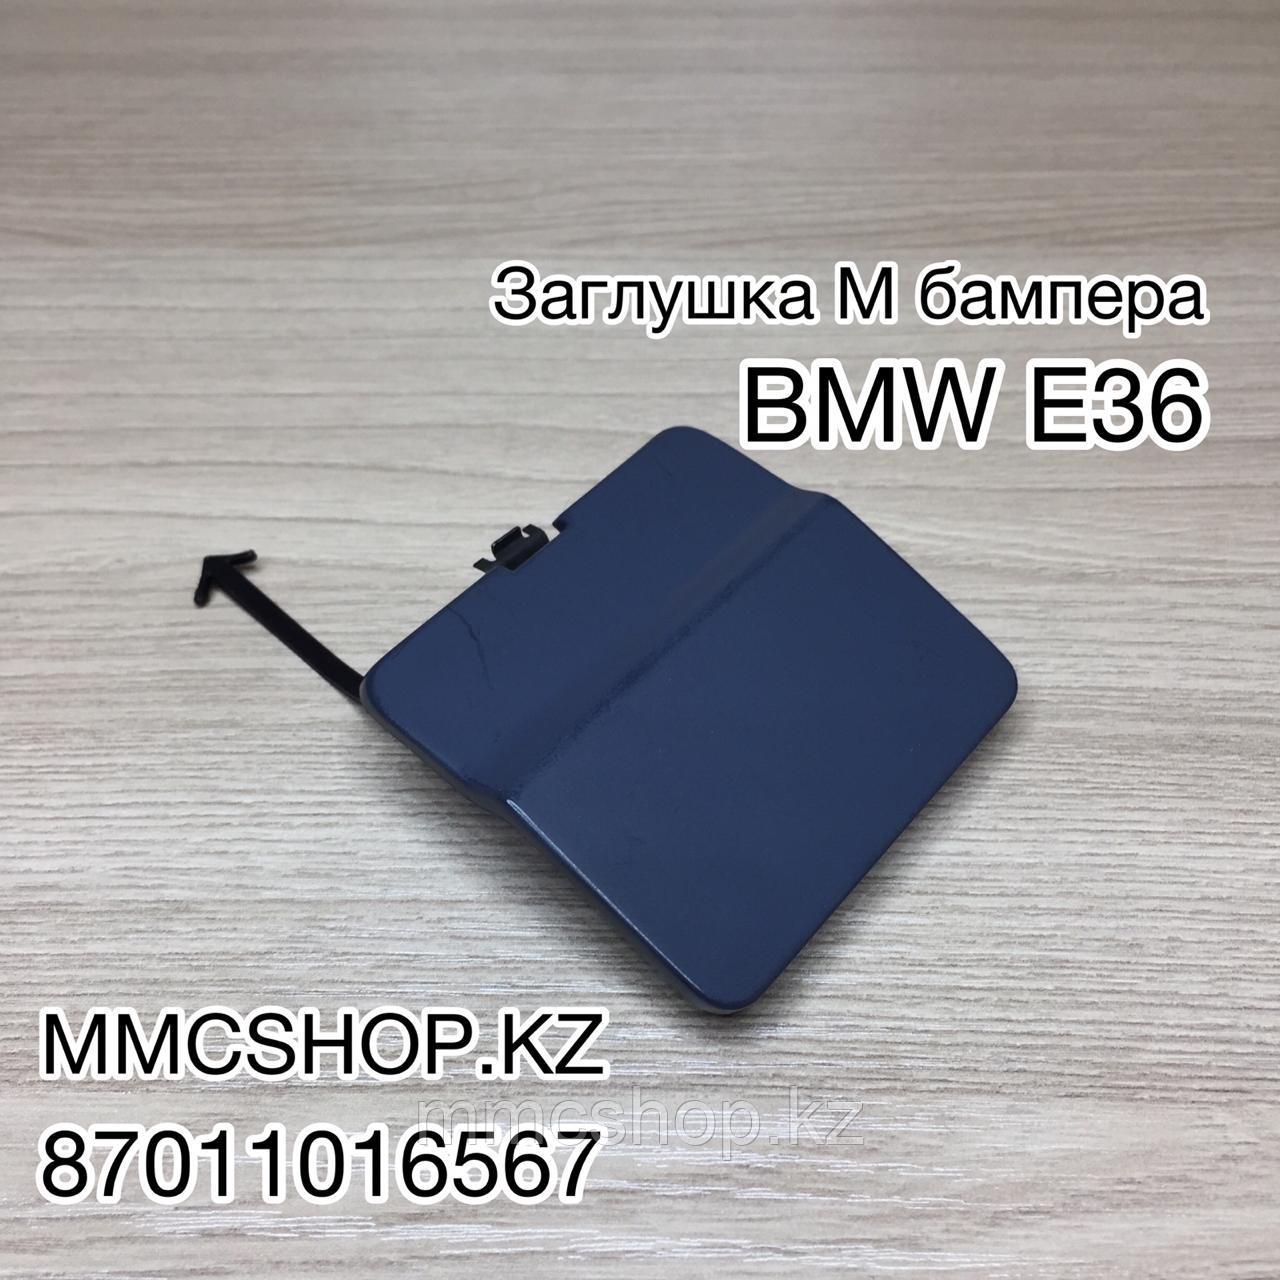 BMW E36 заглушка заднего м бампера 51122235497 БМВ Е36